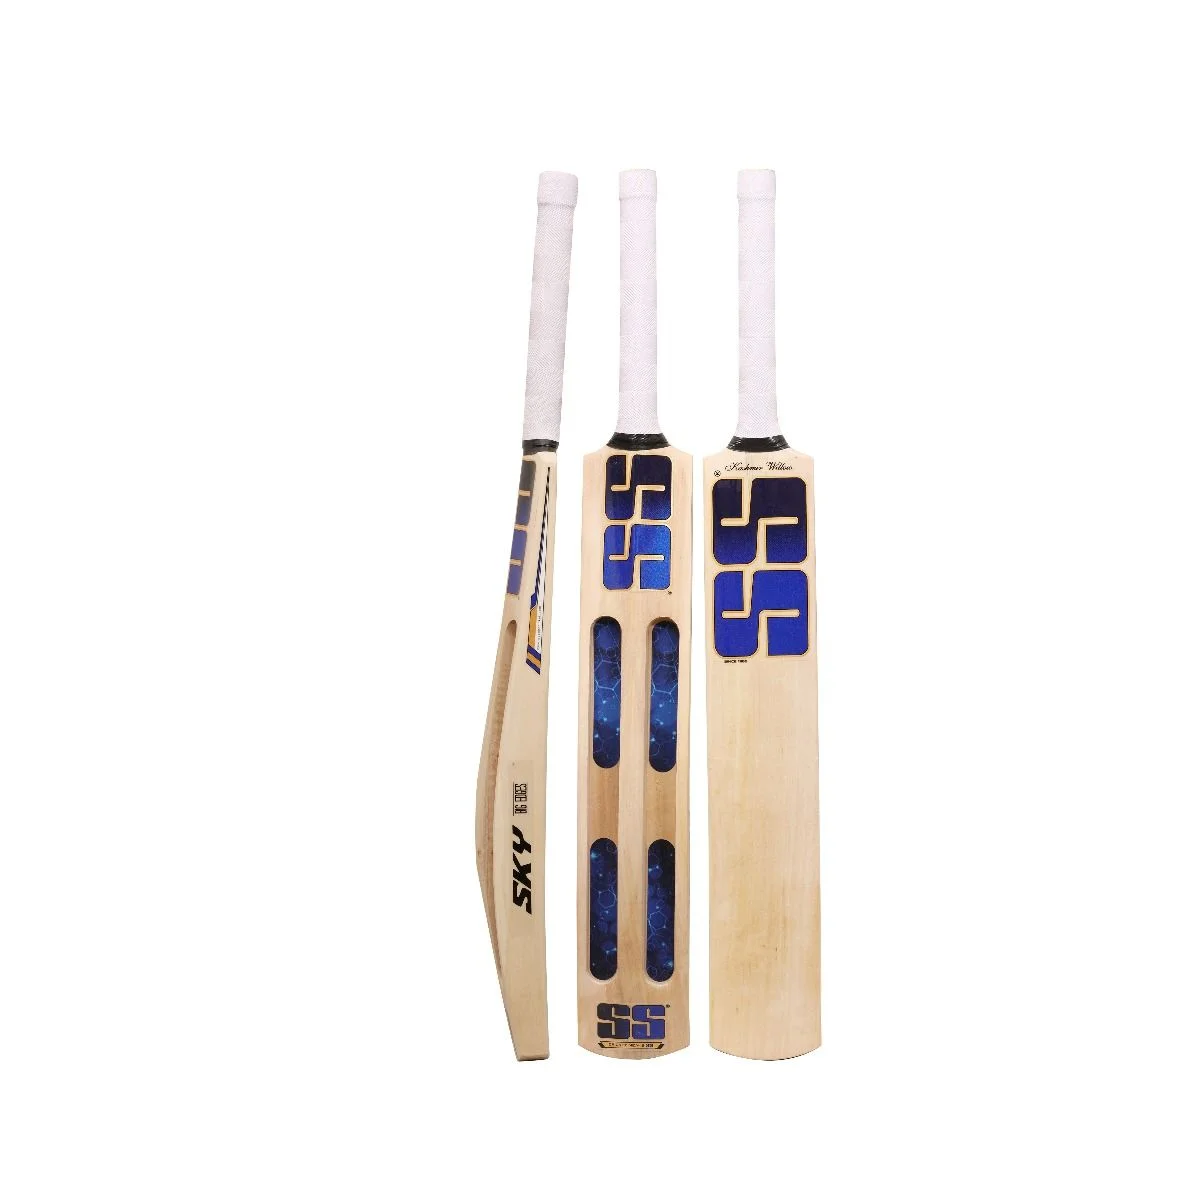 Players jumbo Kashmir Willow Cricket Scoop Bat